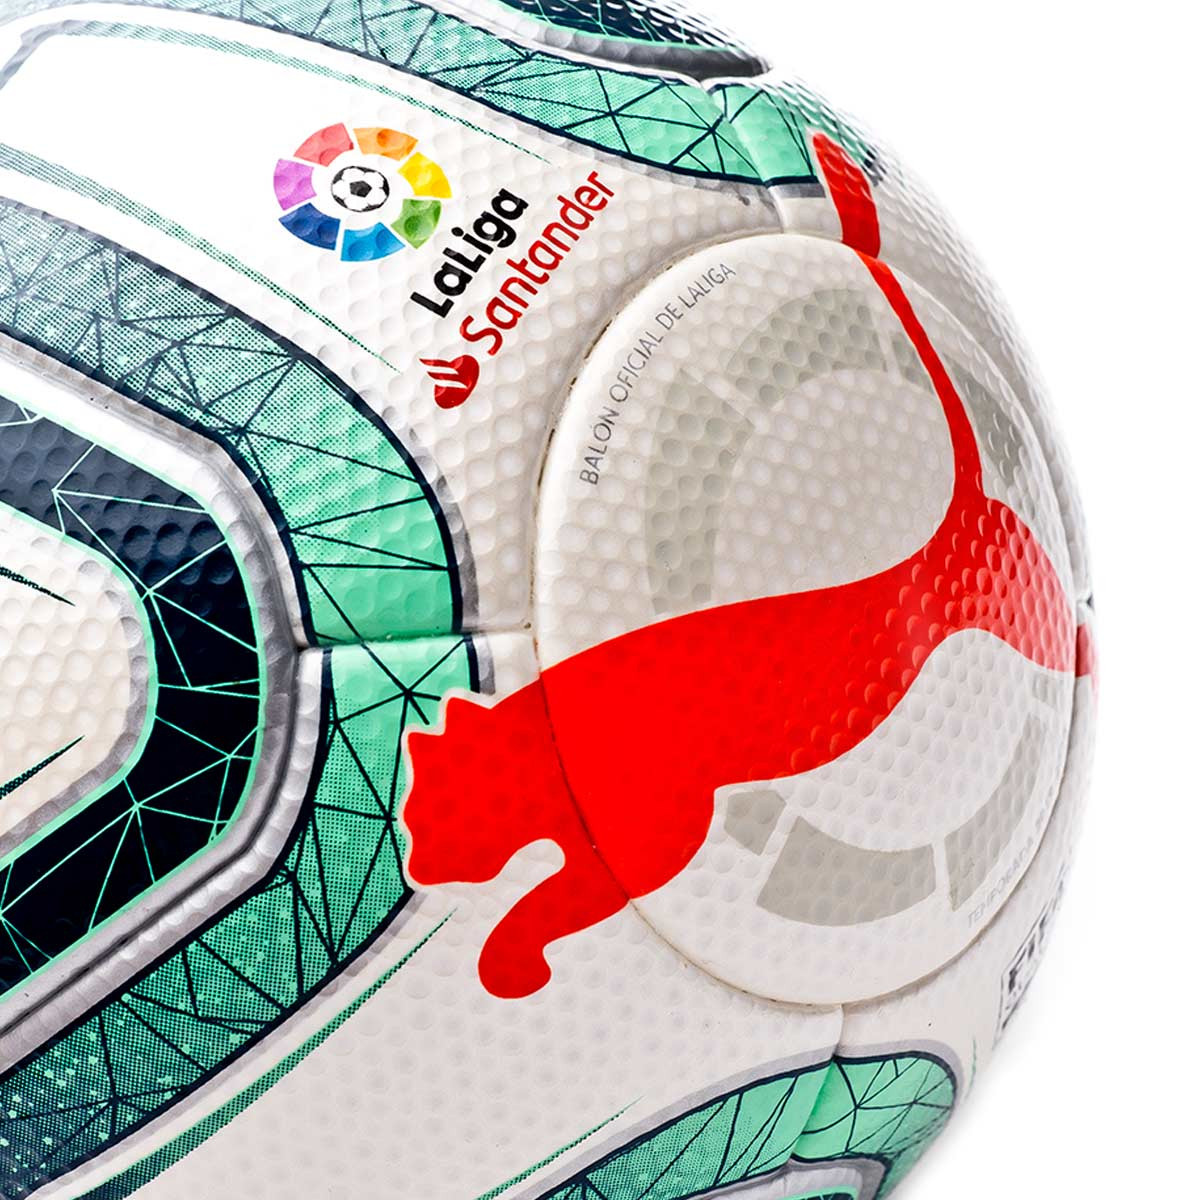 Ball Puma LaLiga FIFA Quality Pro 2019 